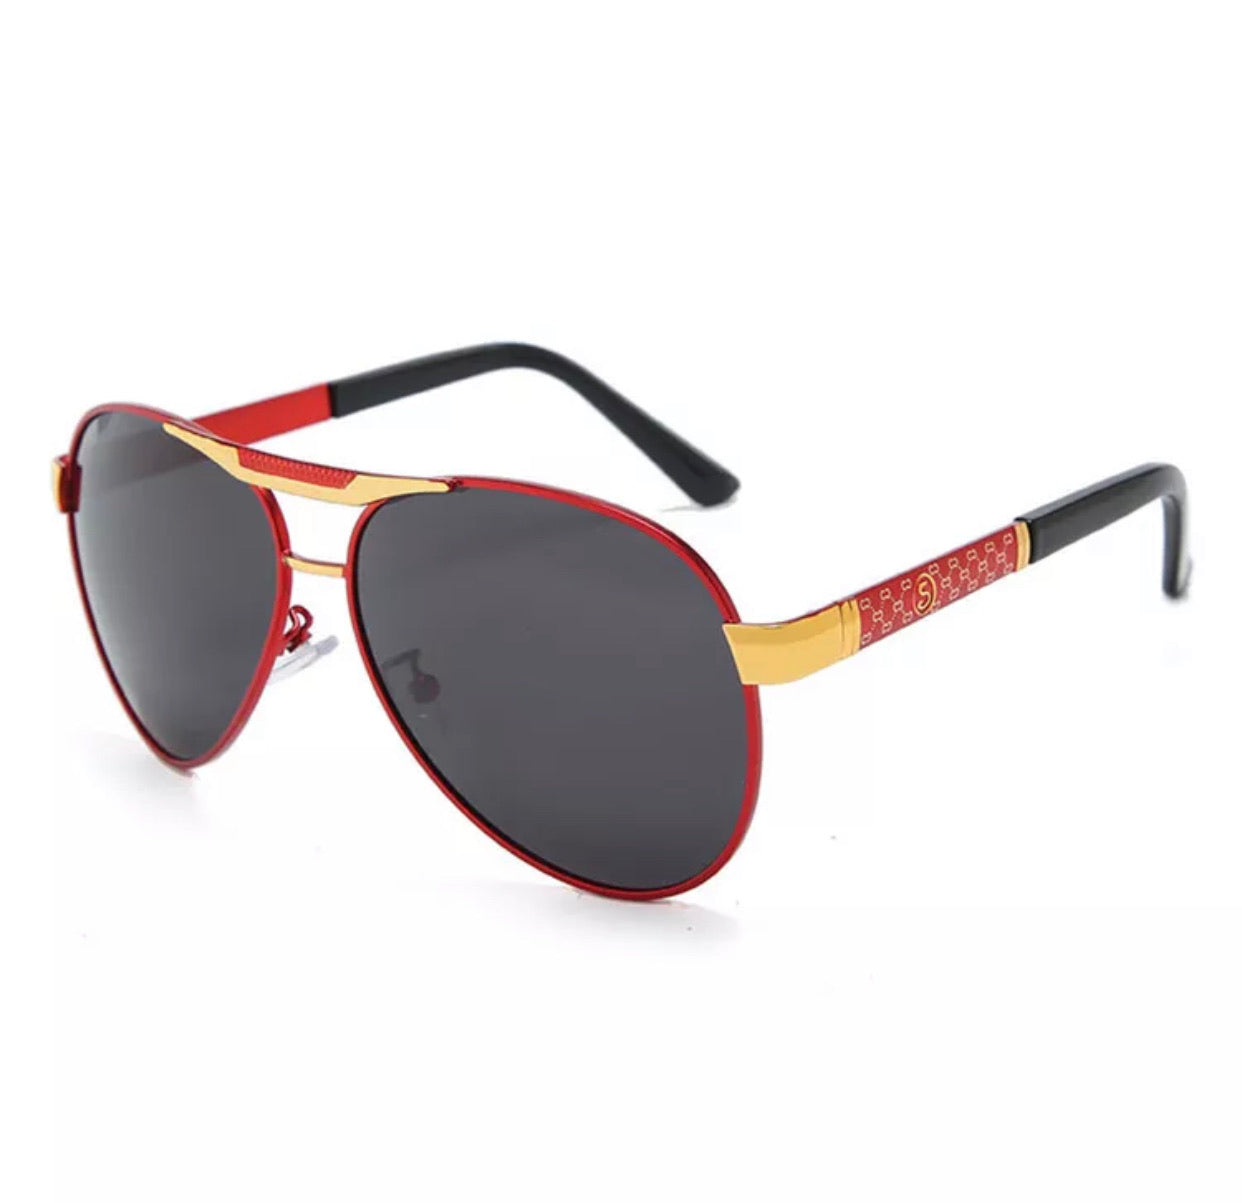 Red/Gold Modish Sunglasses